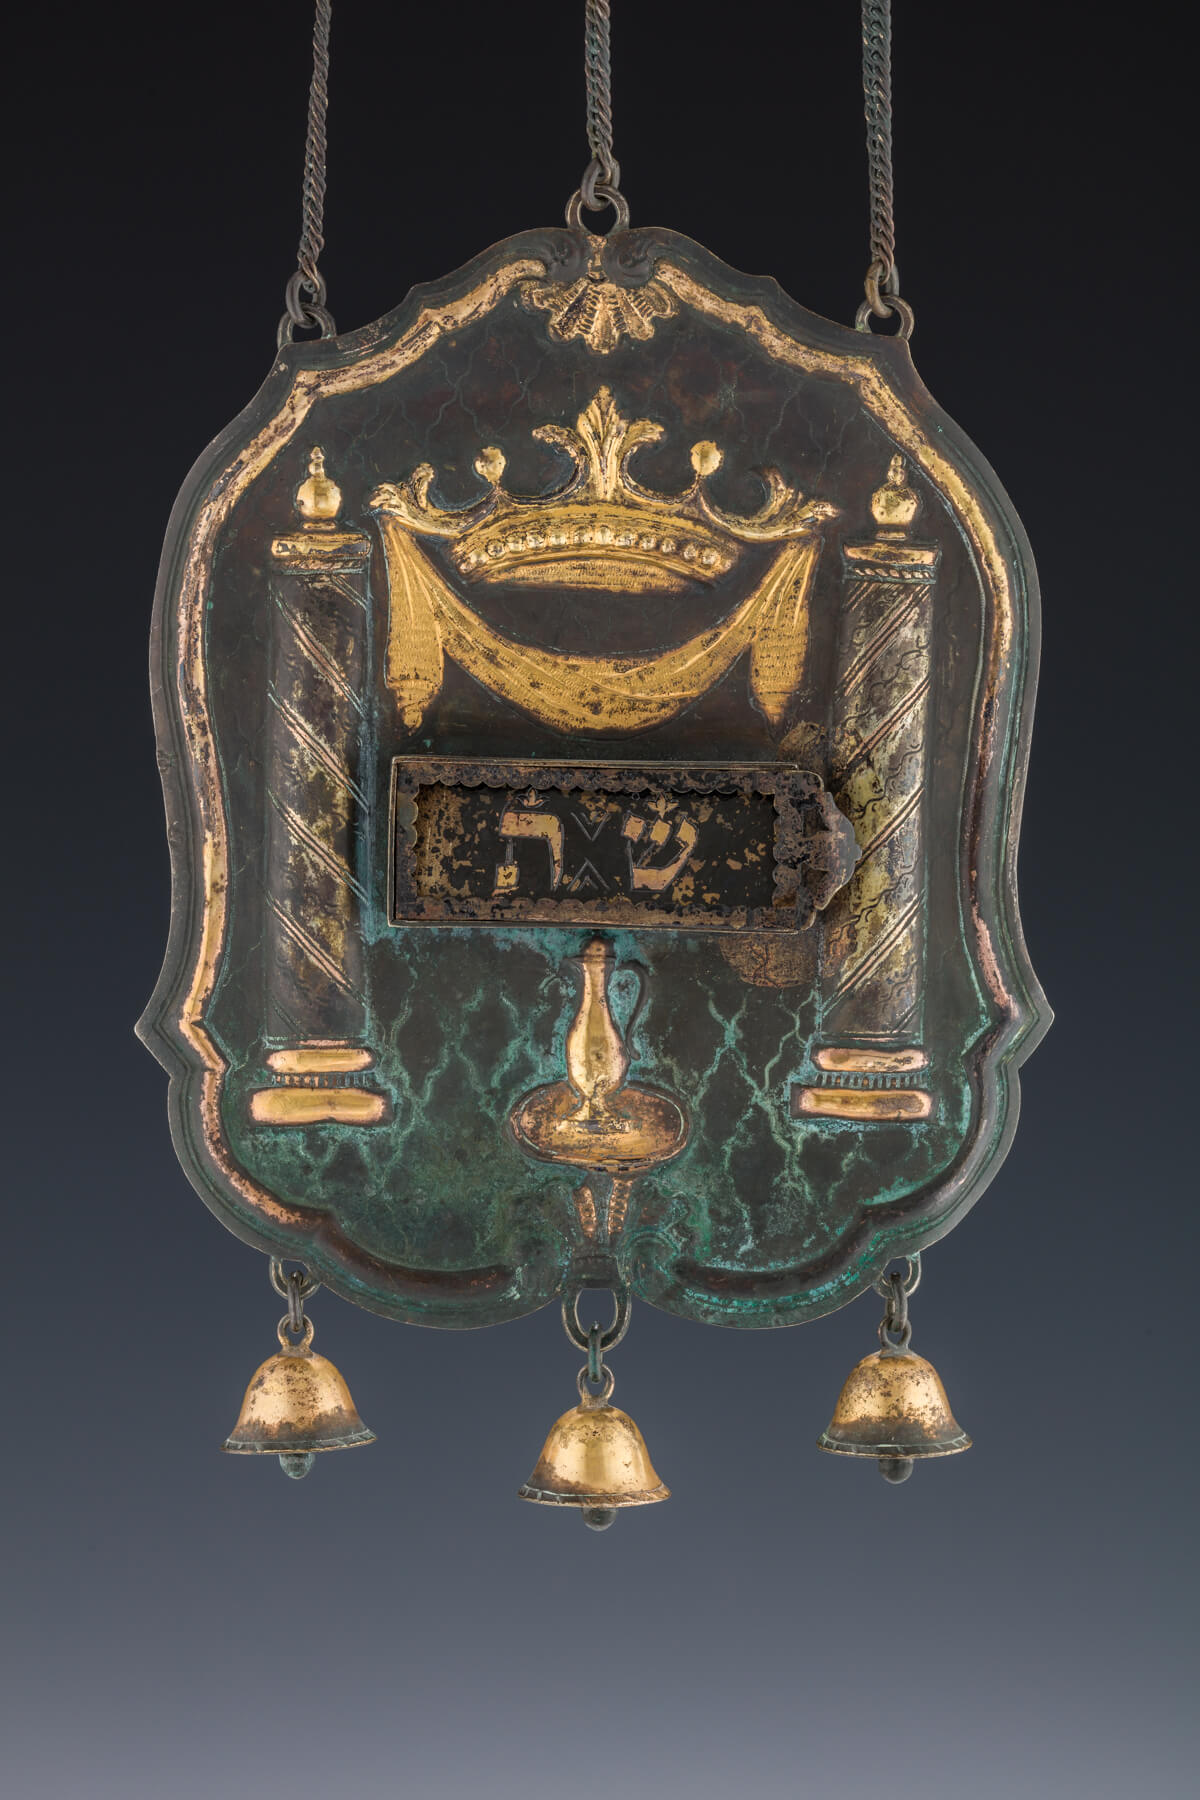 097. A Silver Torah Shield